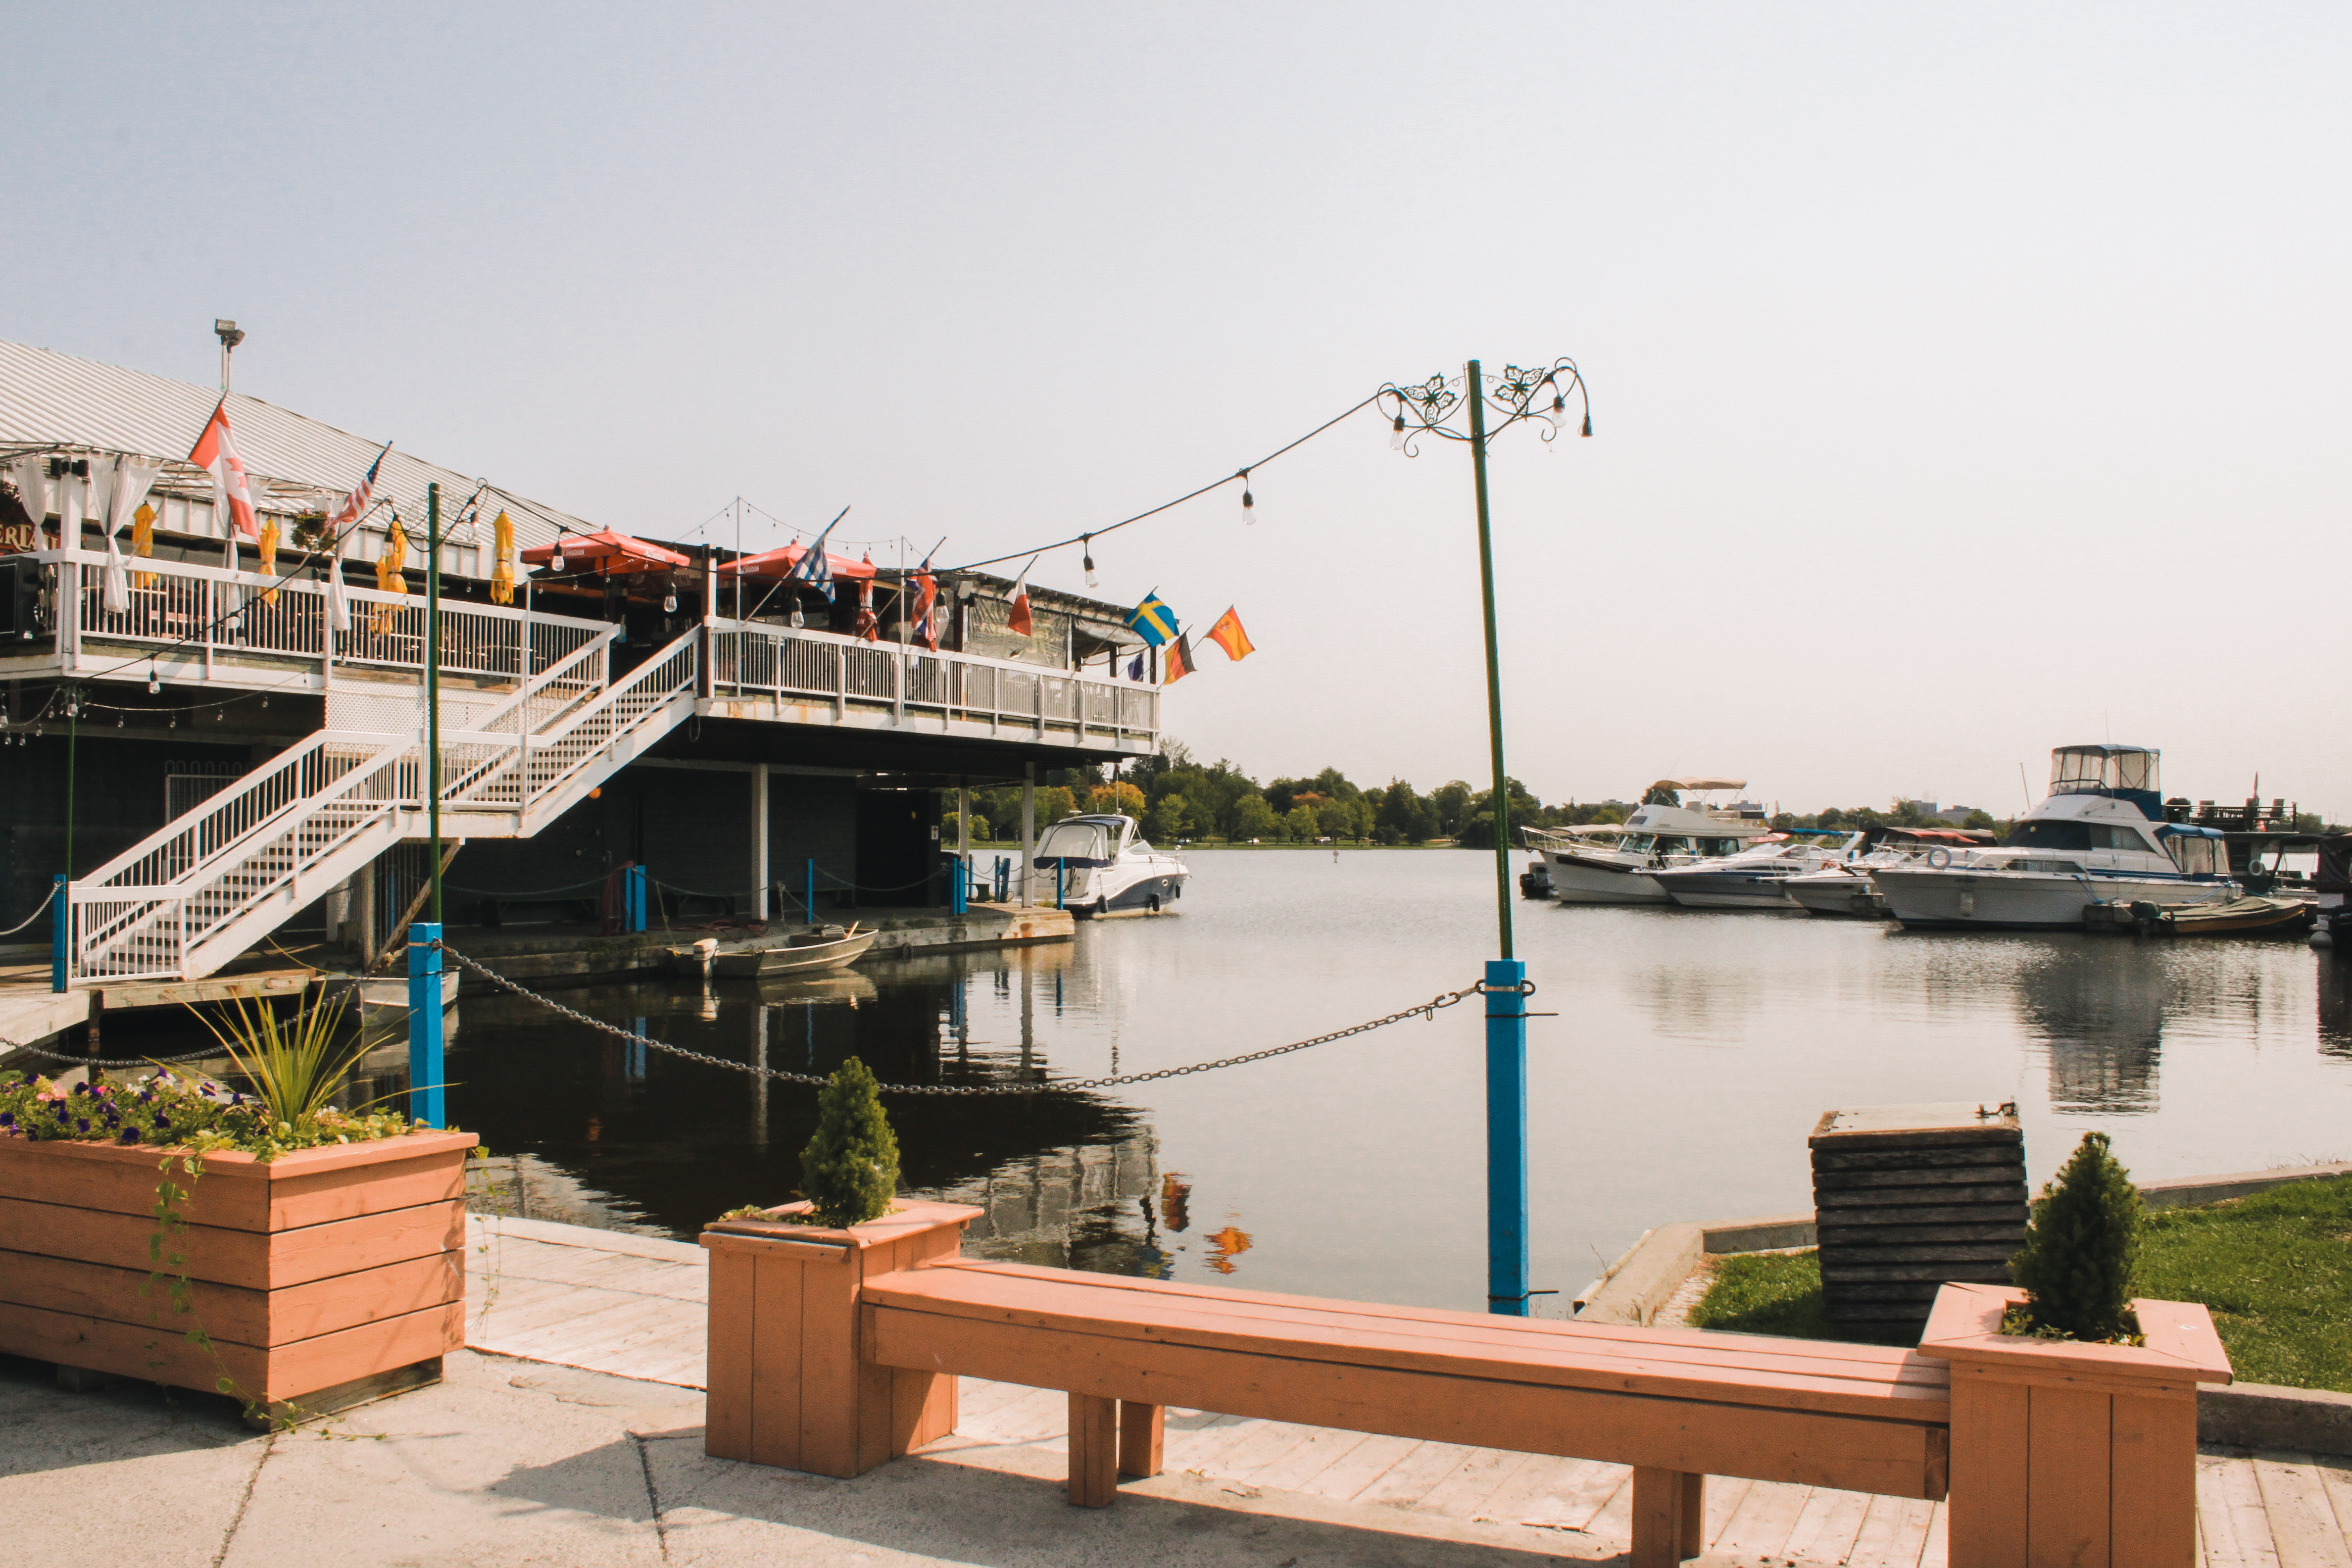 Dows lake Canoe and Restaurants